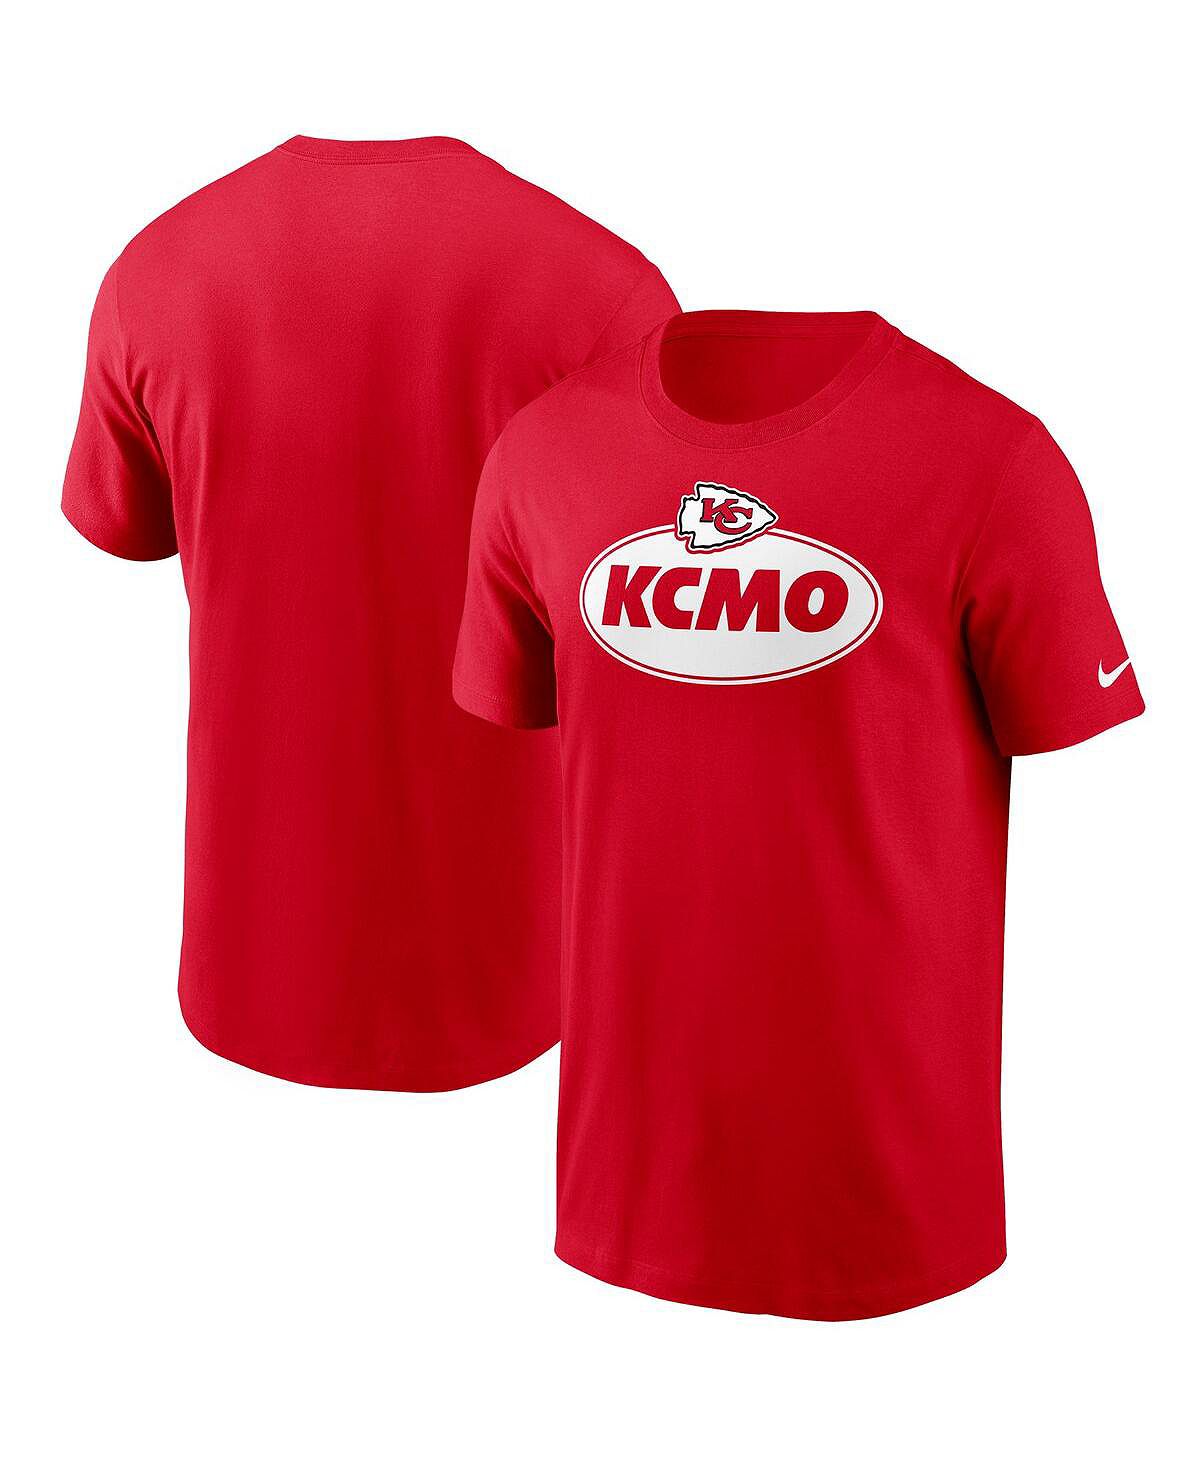 лилейник канзас сити кикер Мужская красная футболка kansas city chiefs hometown collection kcmo Nike, красный